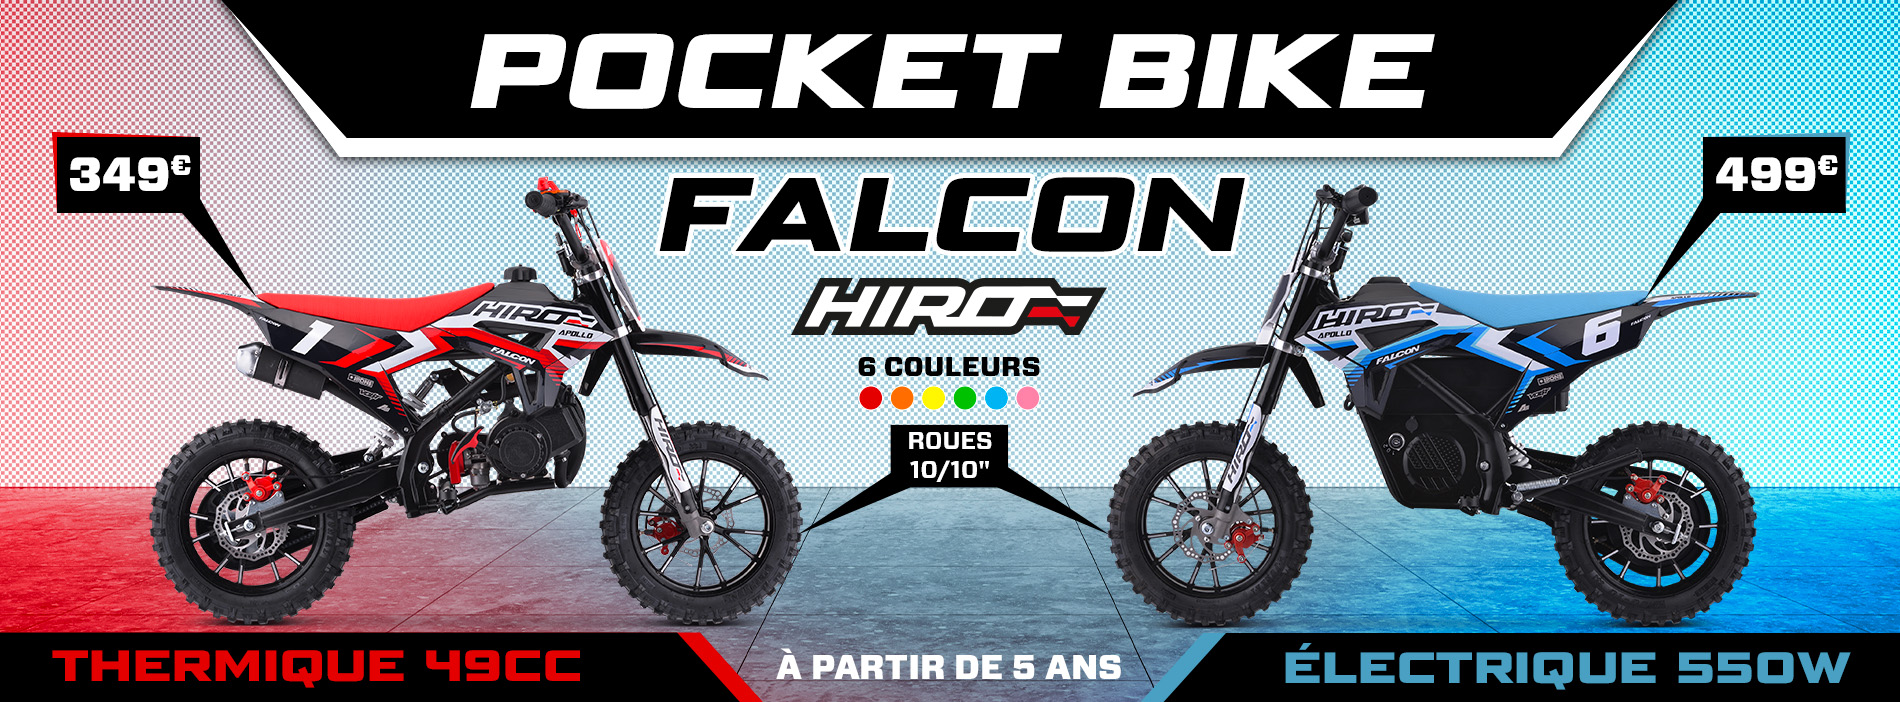 Pocket Bike Hiro Falcon